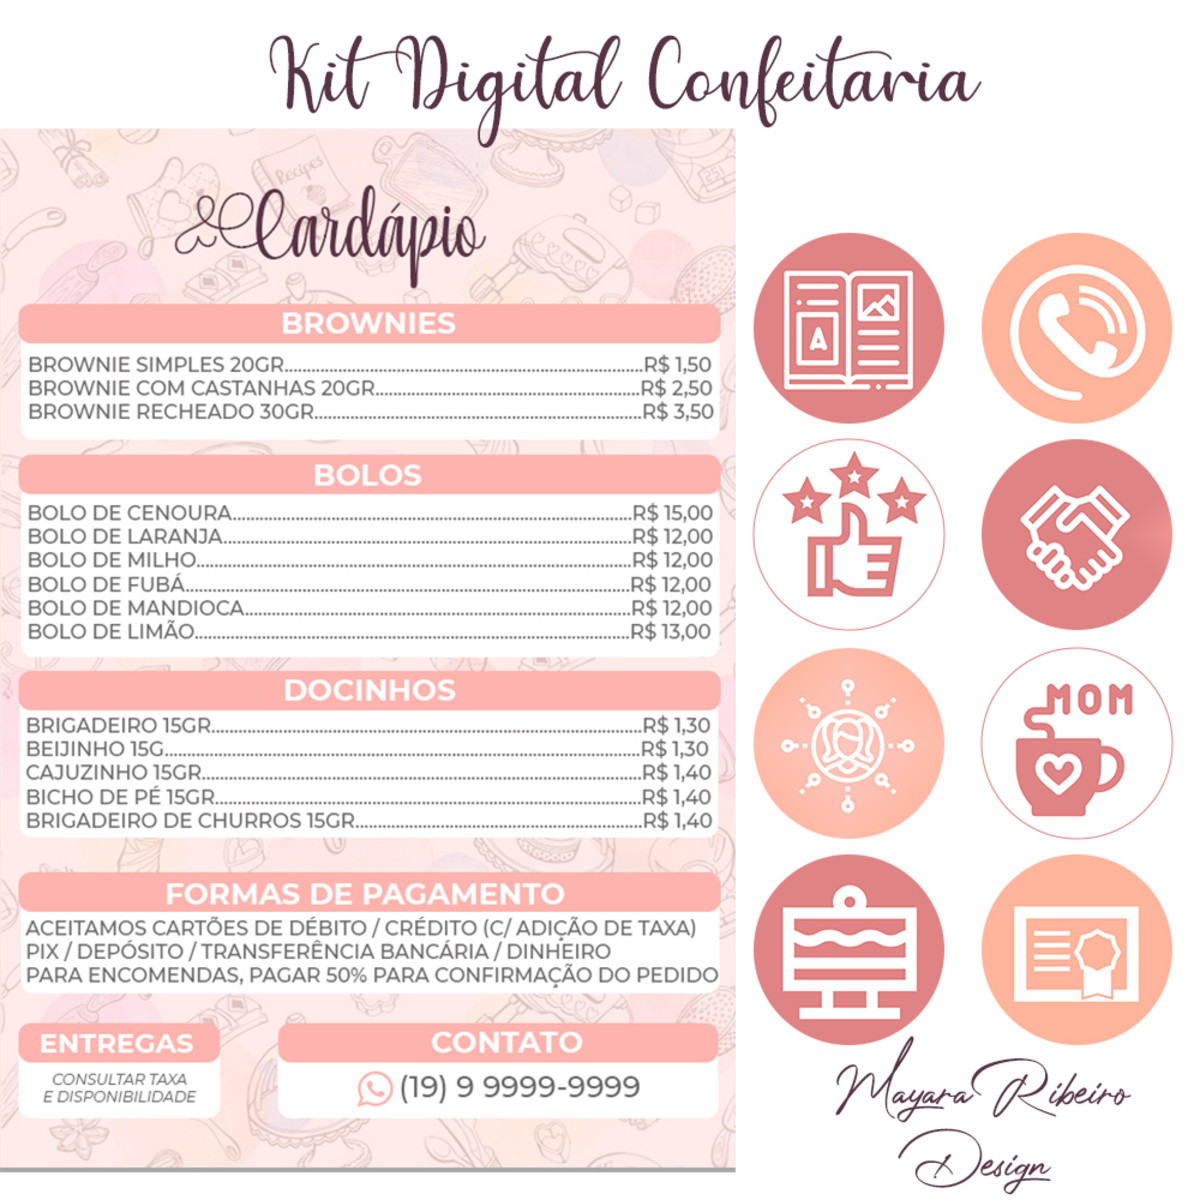 Kit Digital Confeitaria - Cardápio (1 página) + Capa para St no Elo7 |  Mayara Ribeiro Design (1615B68) - cardapio de confeitaria